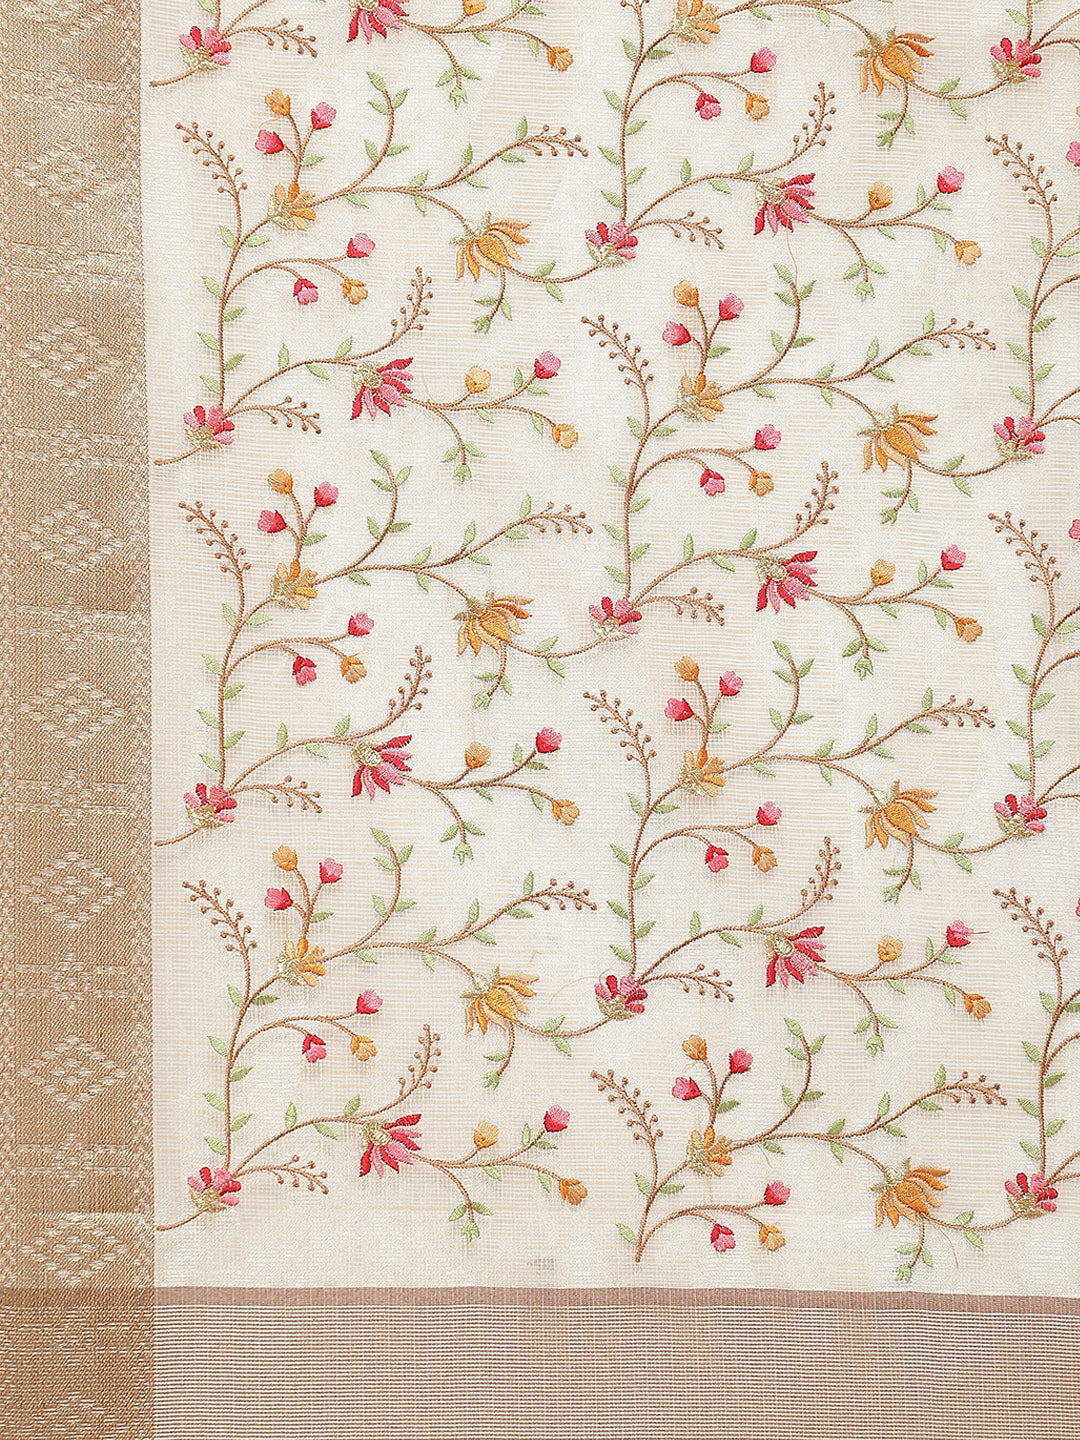 Floral Resham Embroidered Cotton Saree